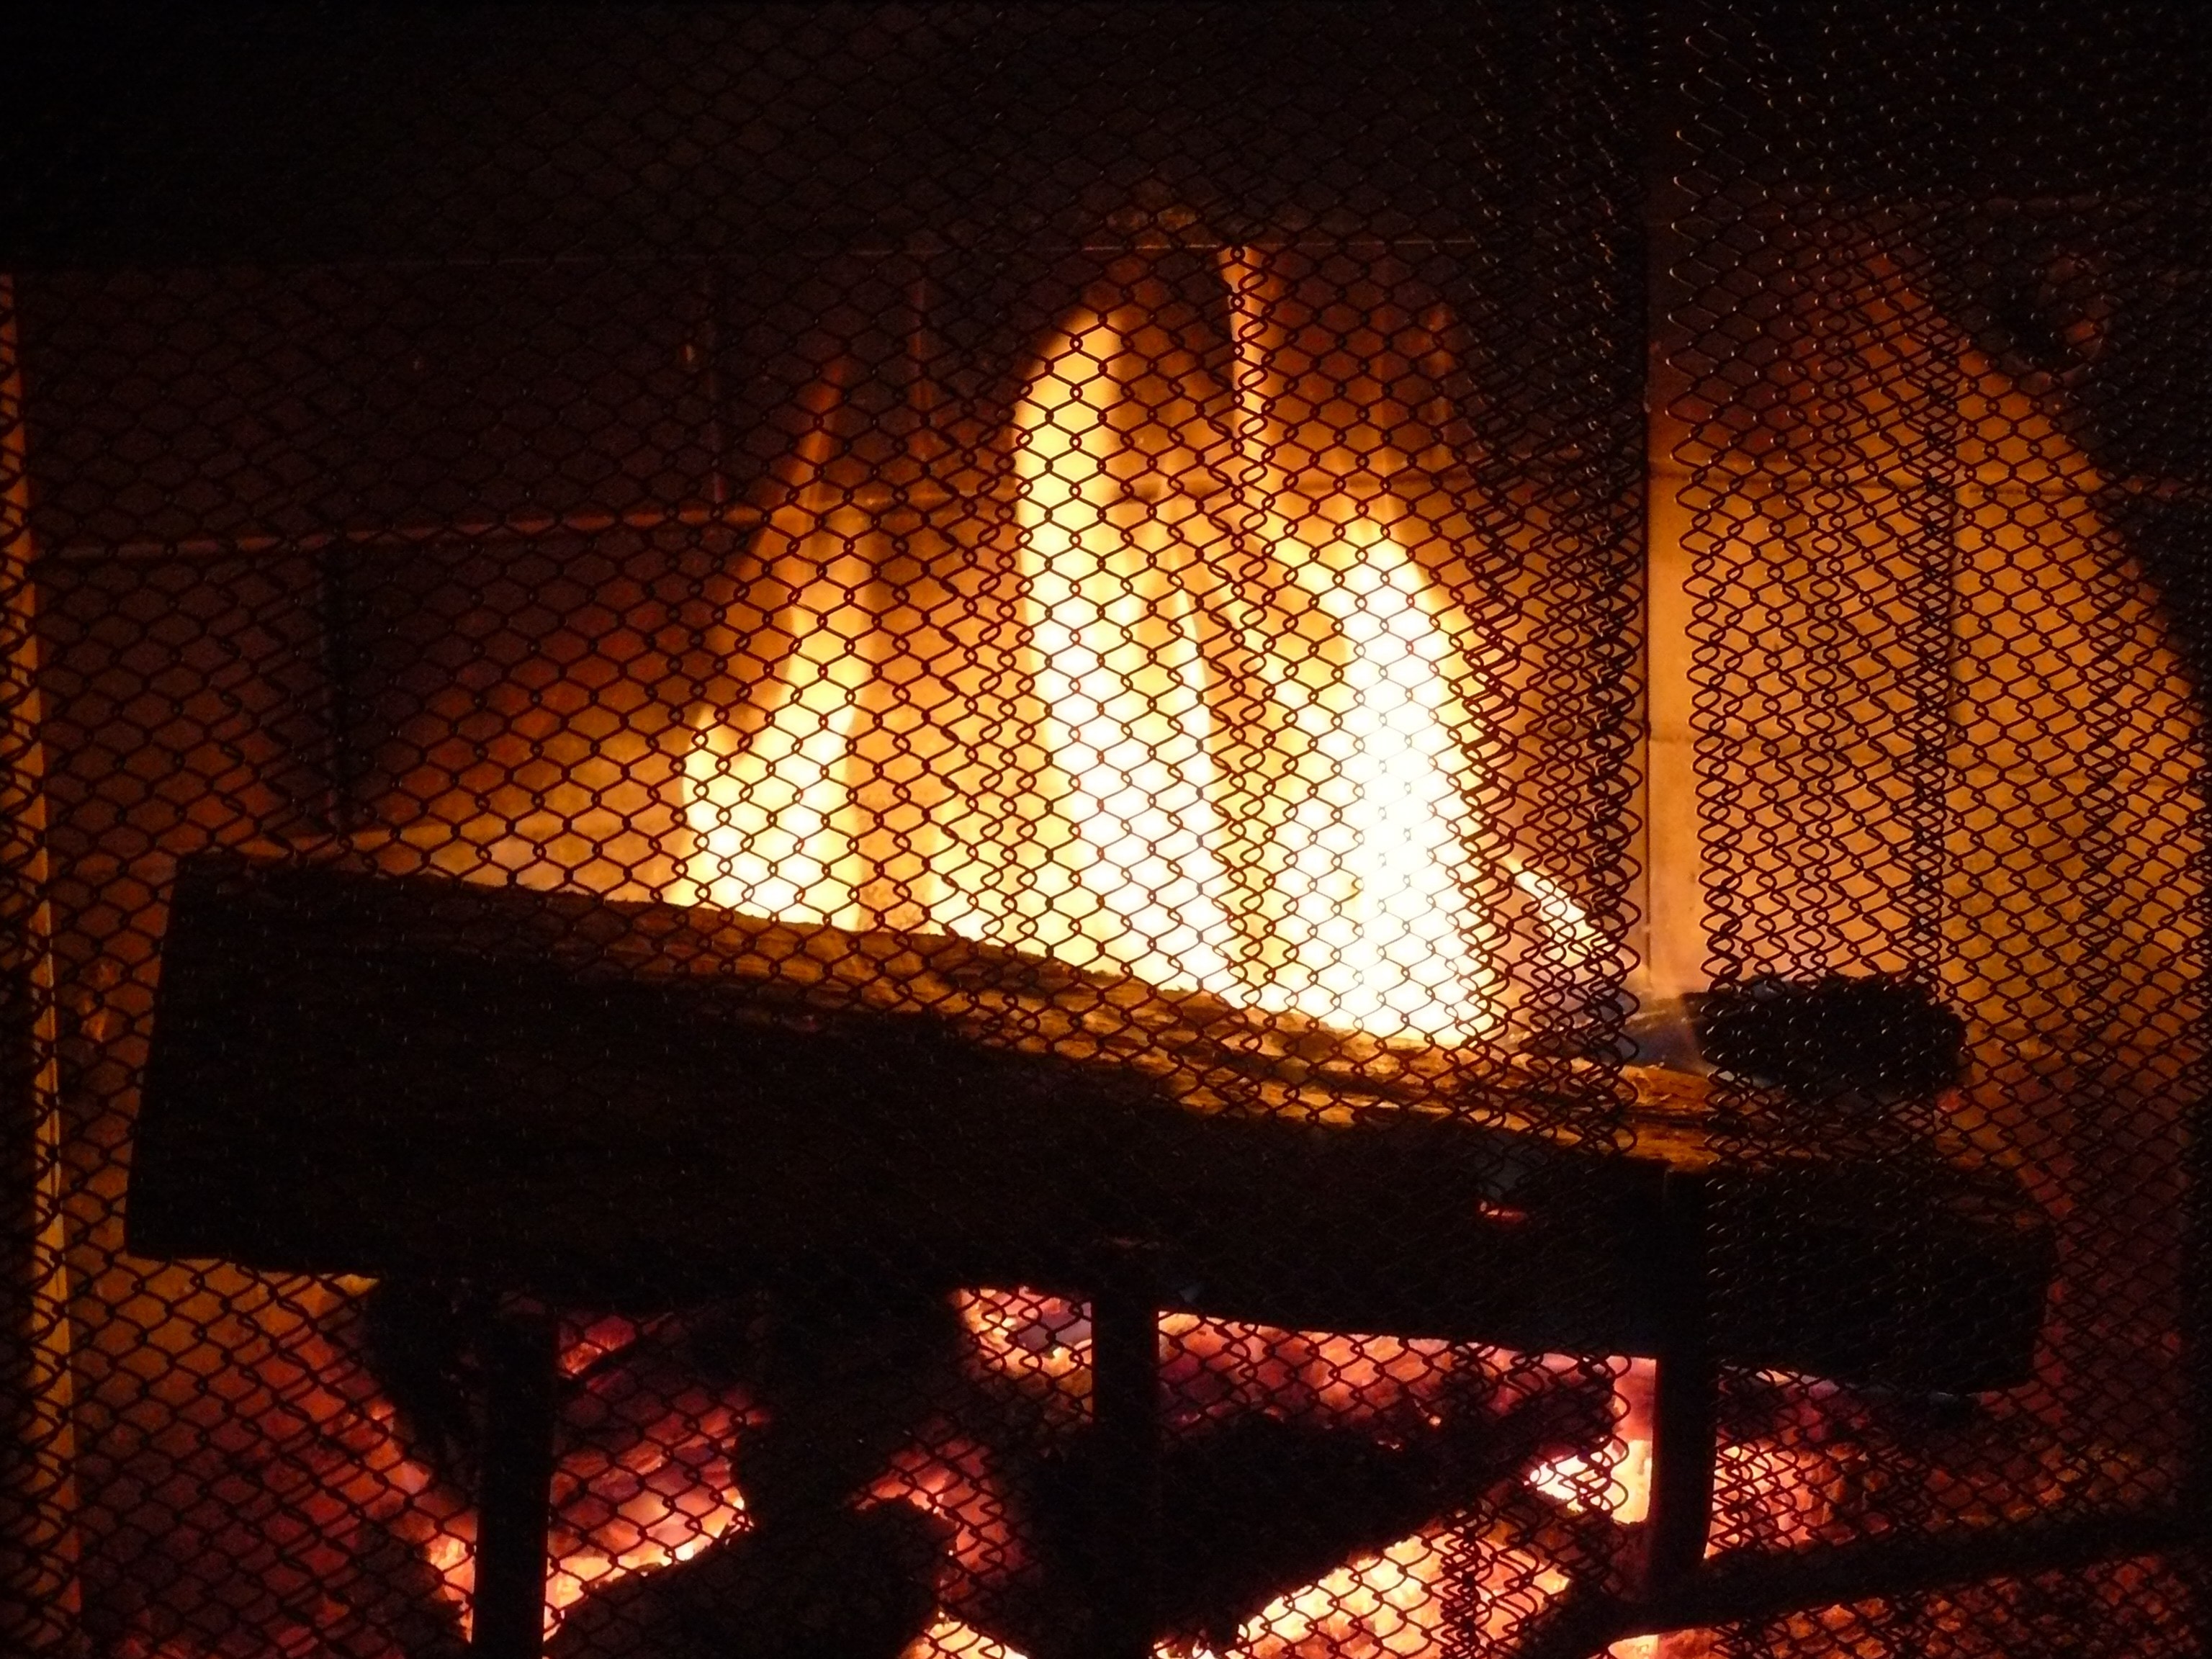 Fire, Screen, Warm, Fireplace, Heat, indoors, burning